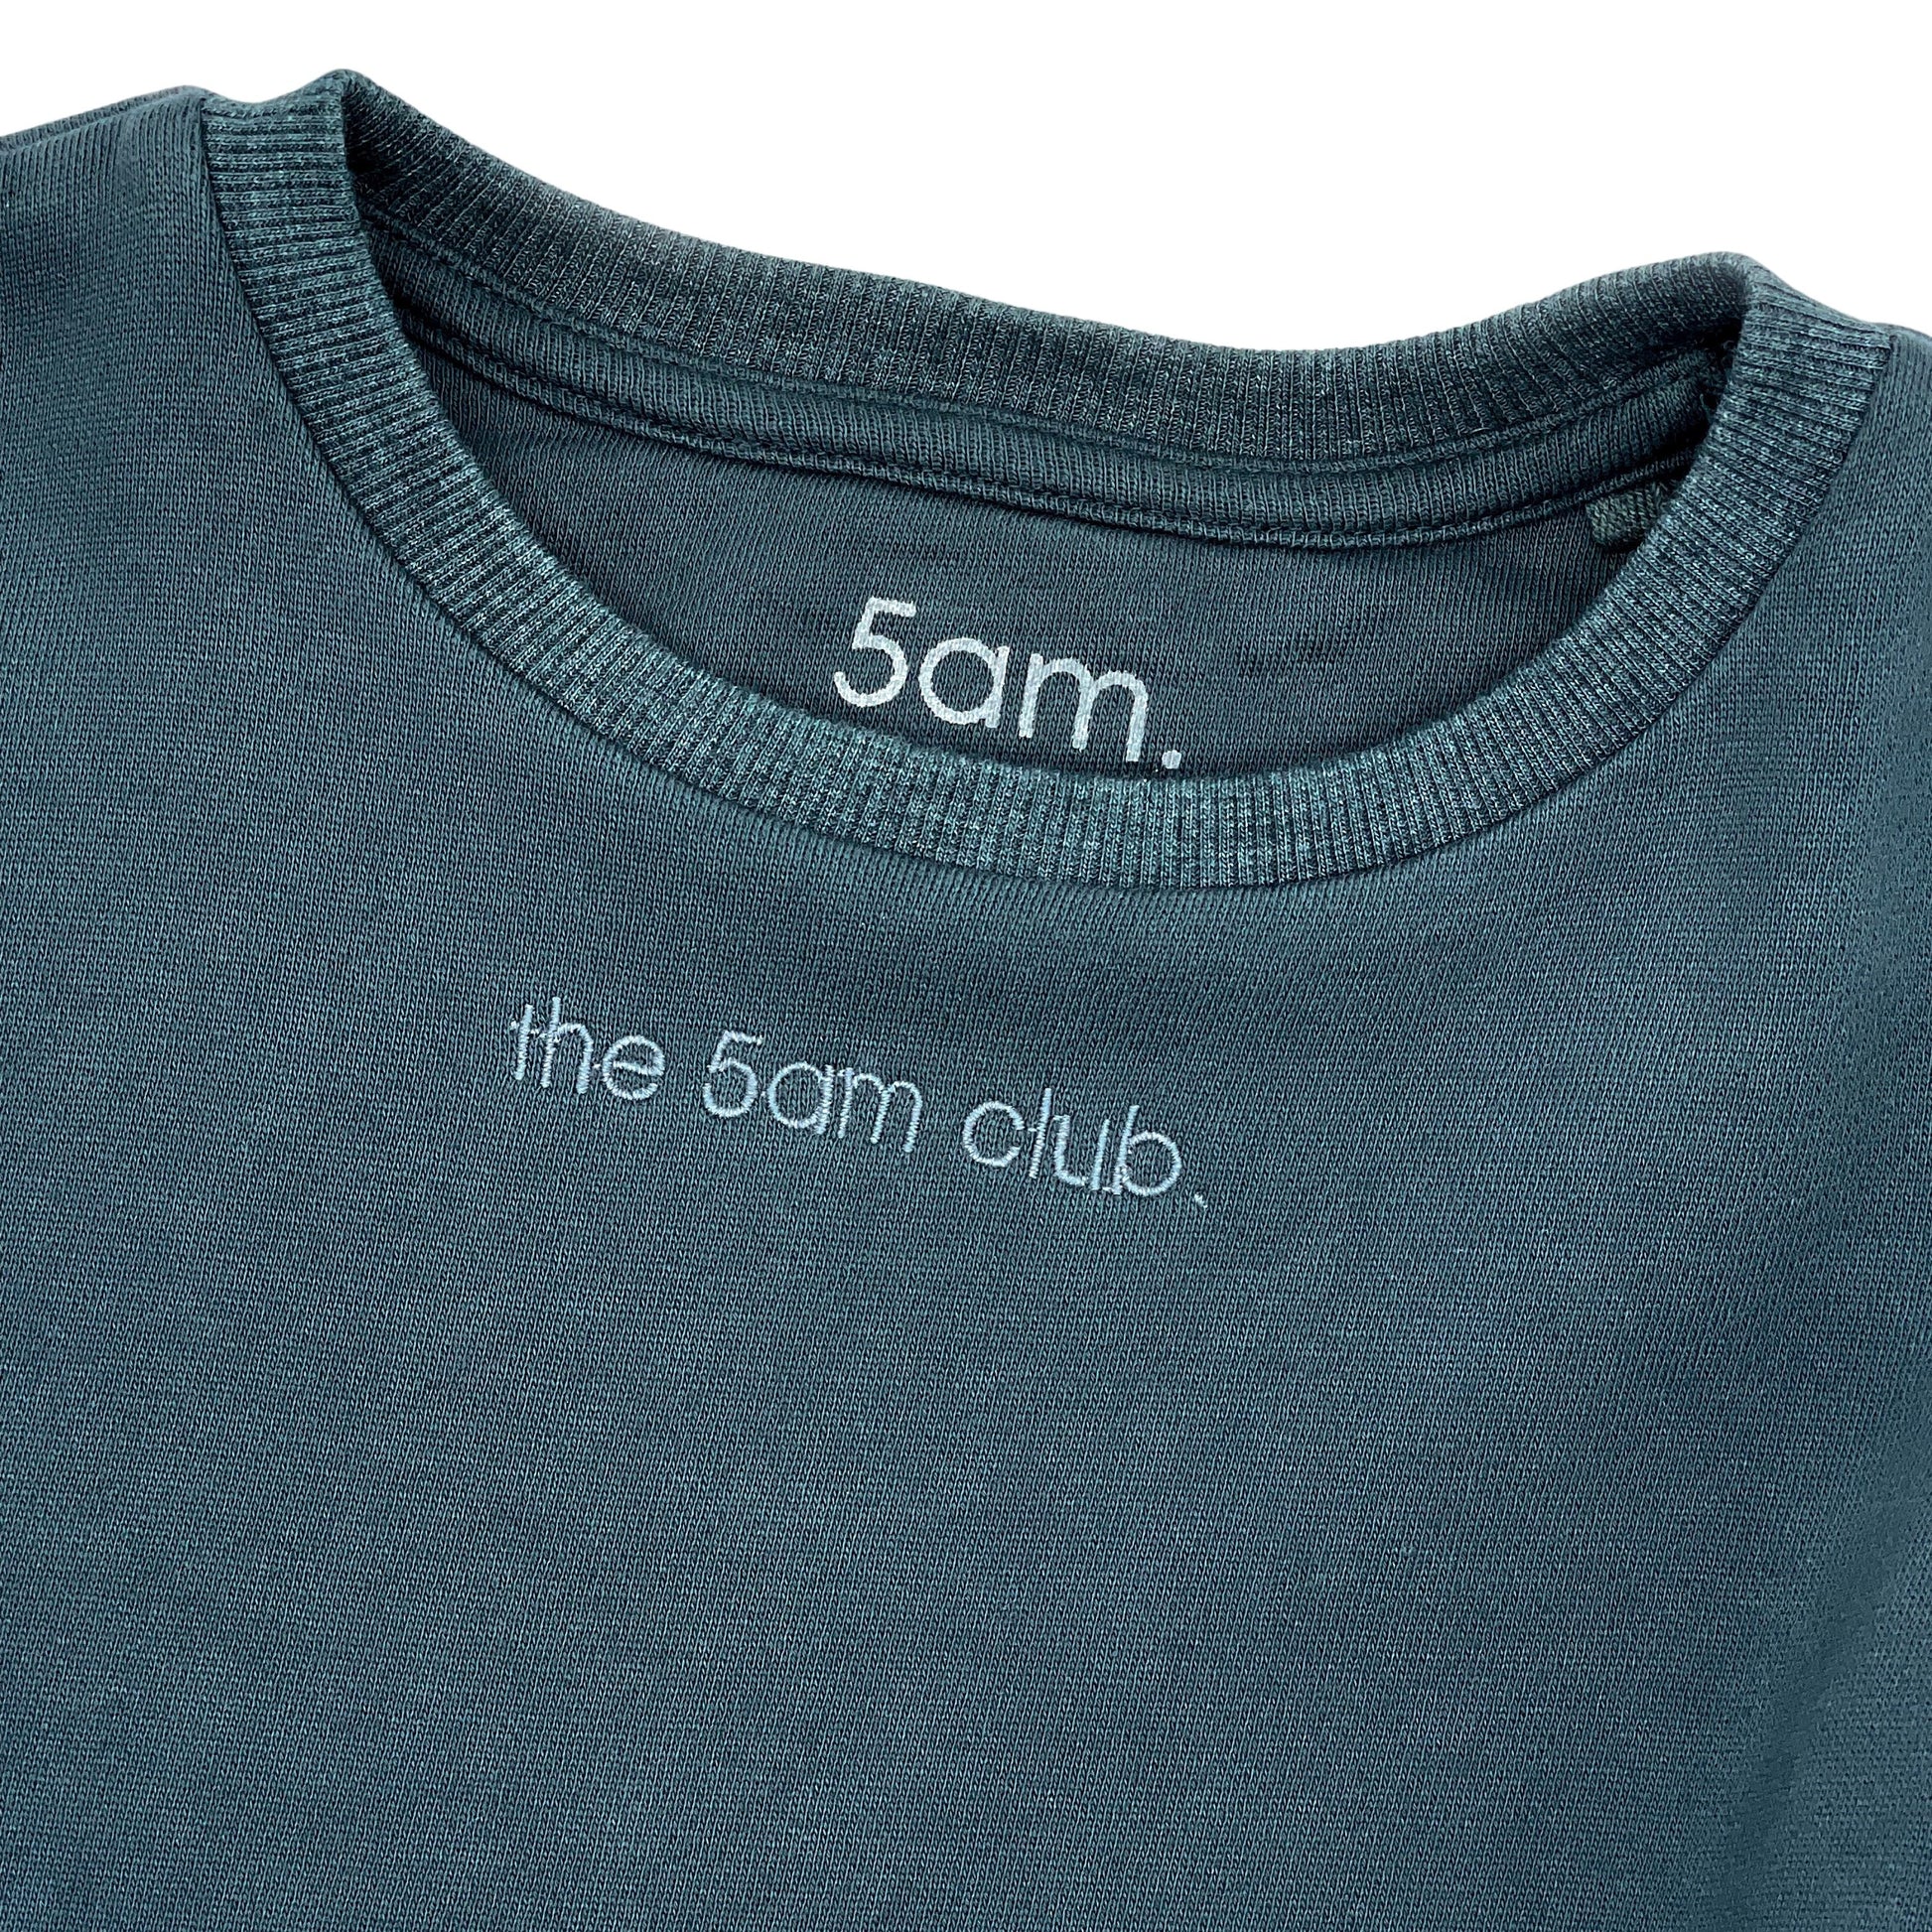 charcoal kids sweatshirt with 5am club logo